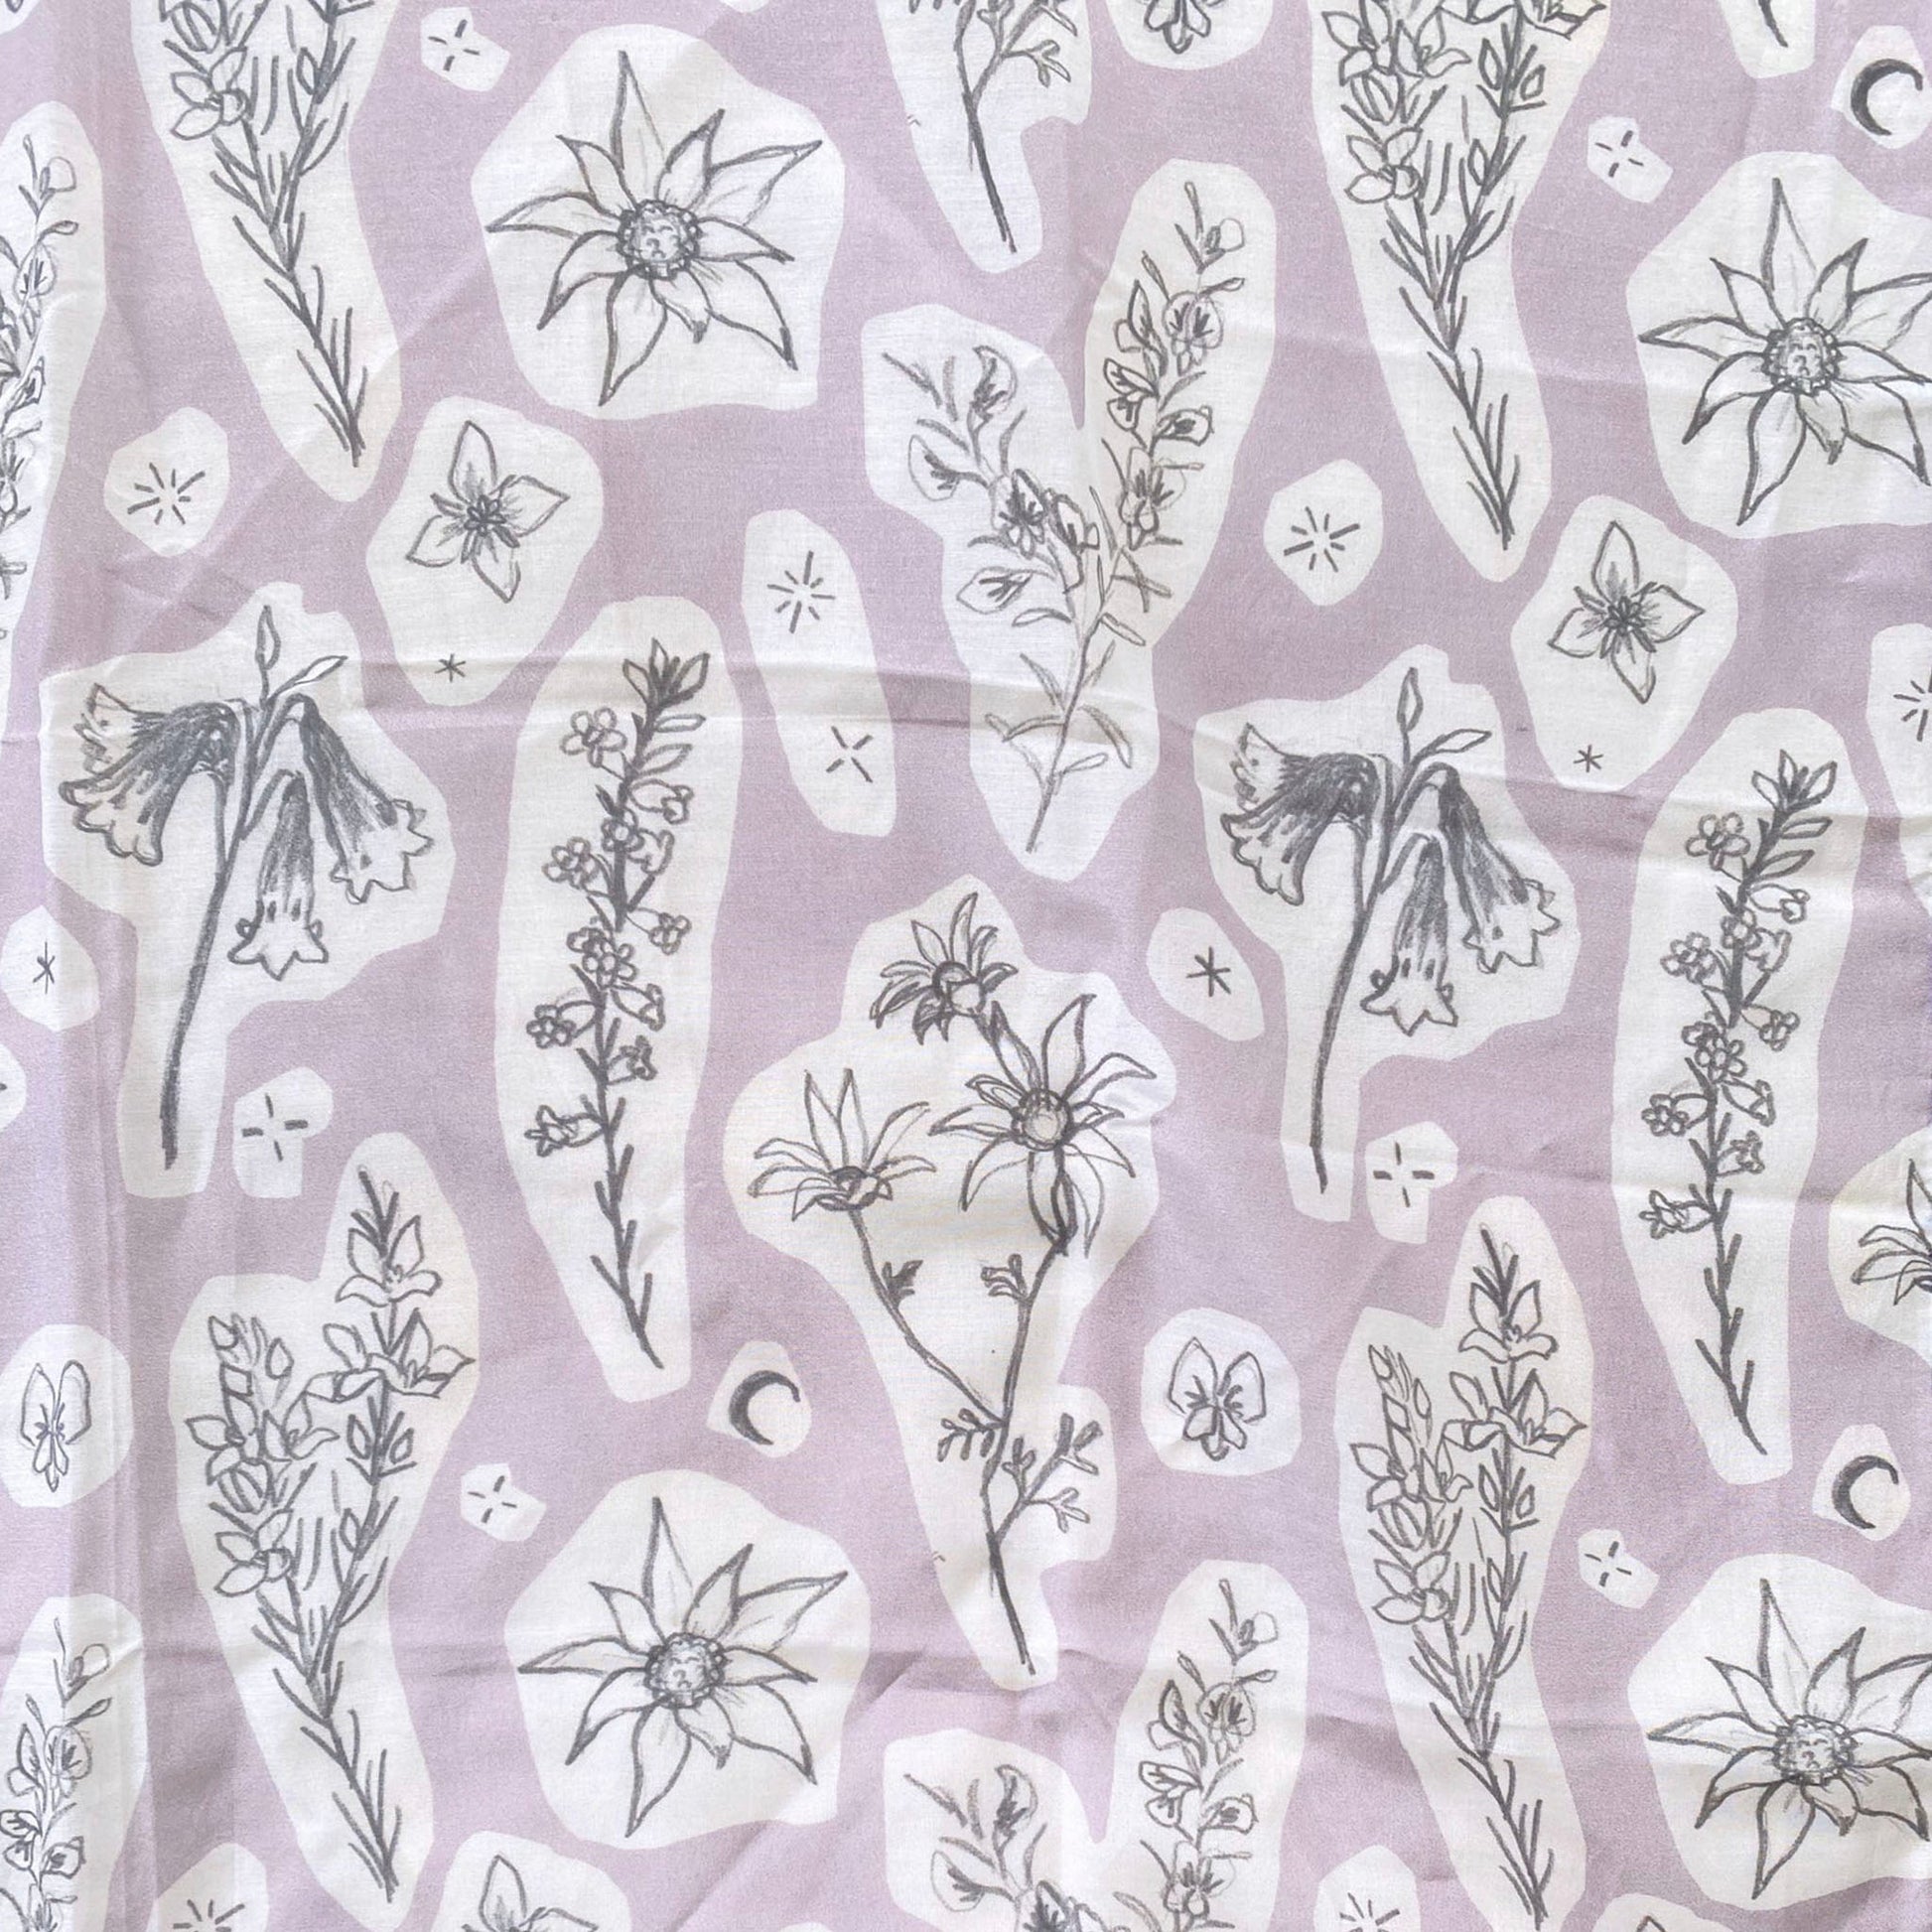 Australian Heathland wildflowers 65 x 65cm square silk cotton scarf.